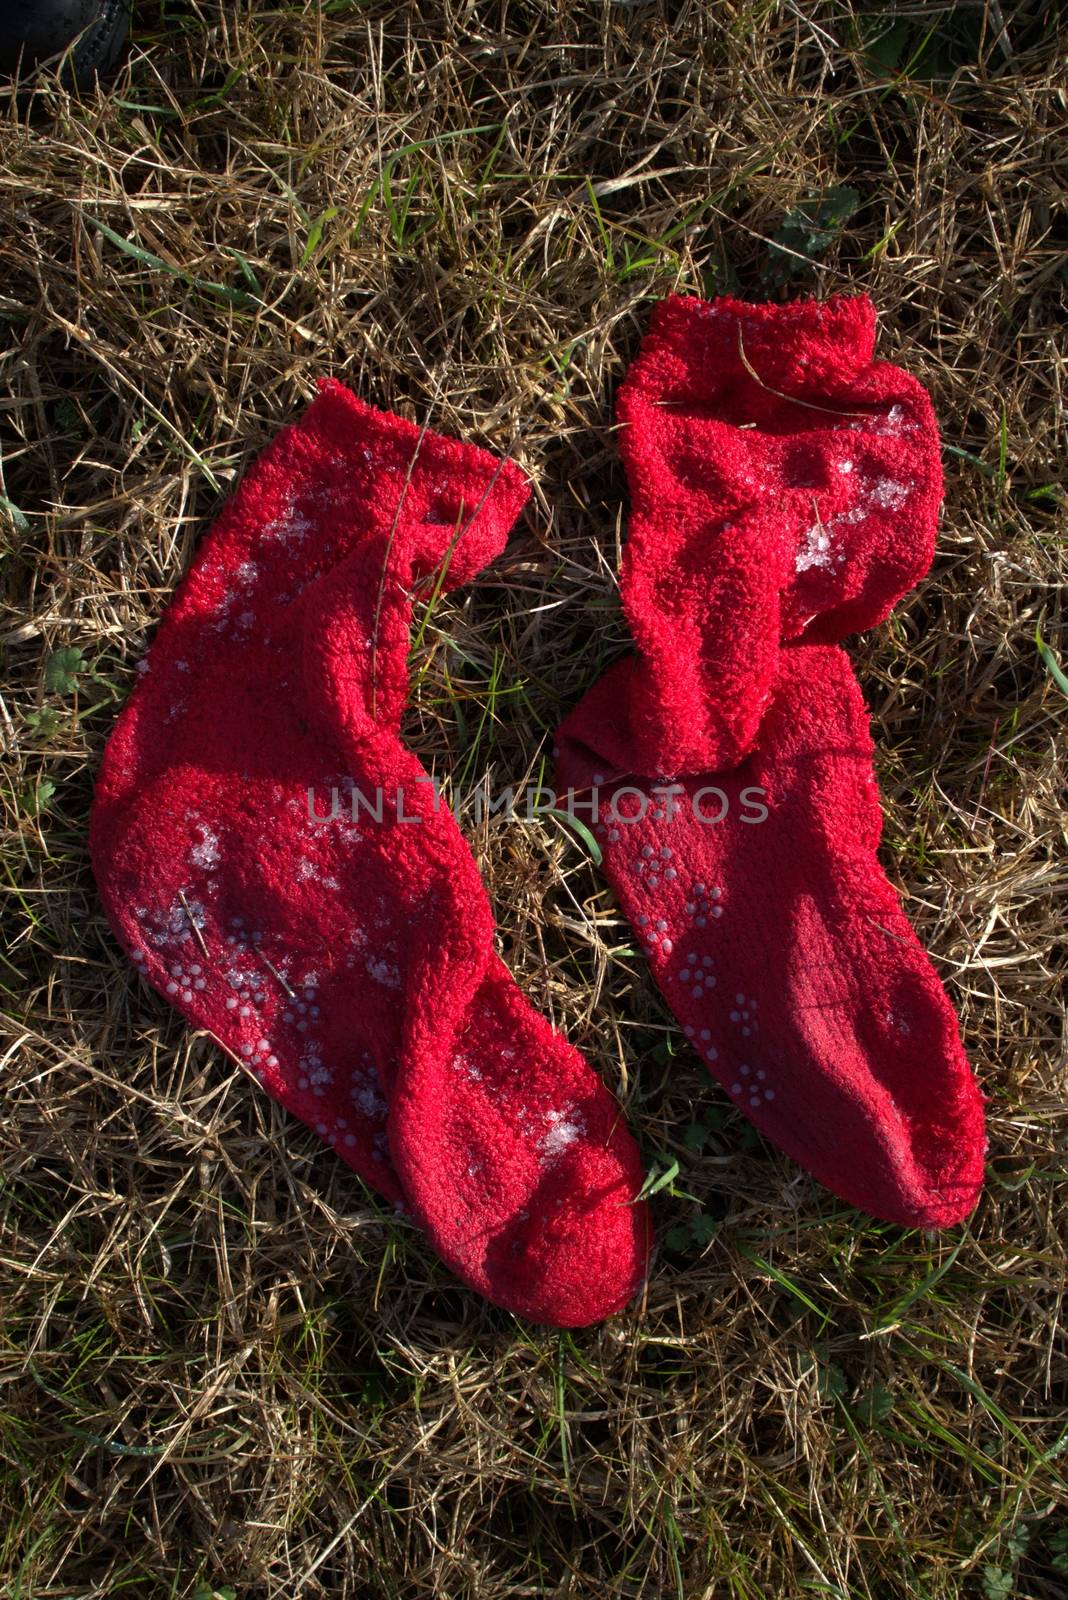 Frozen socks by tozzimr